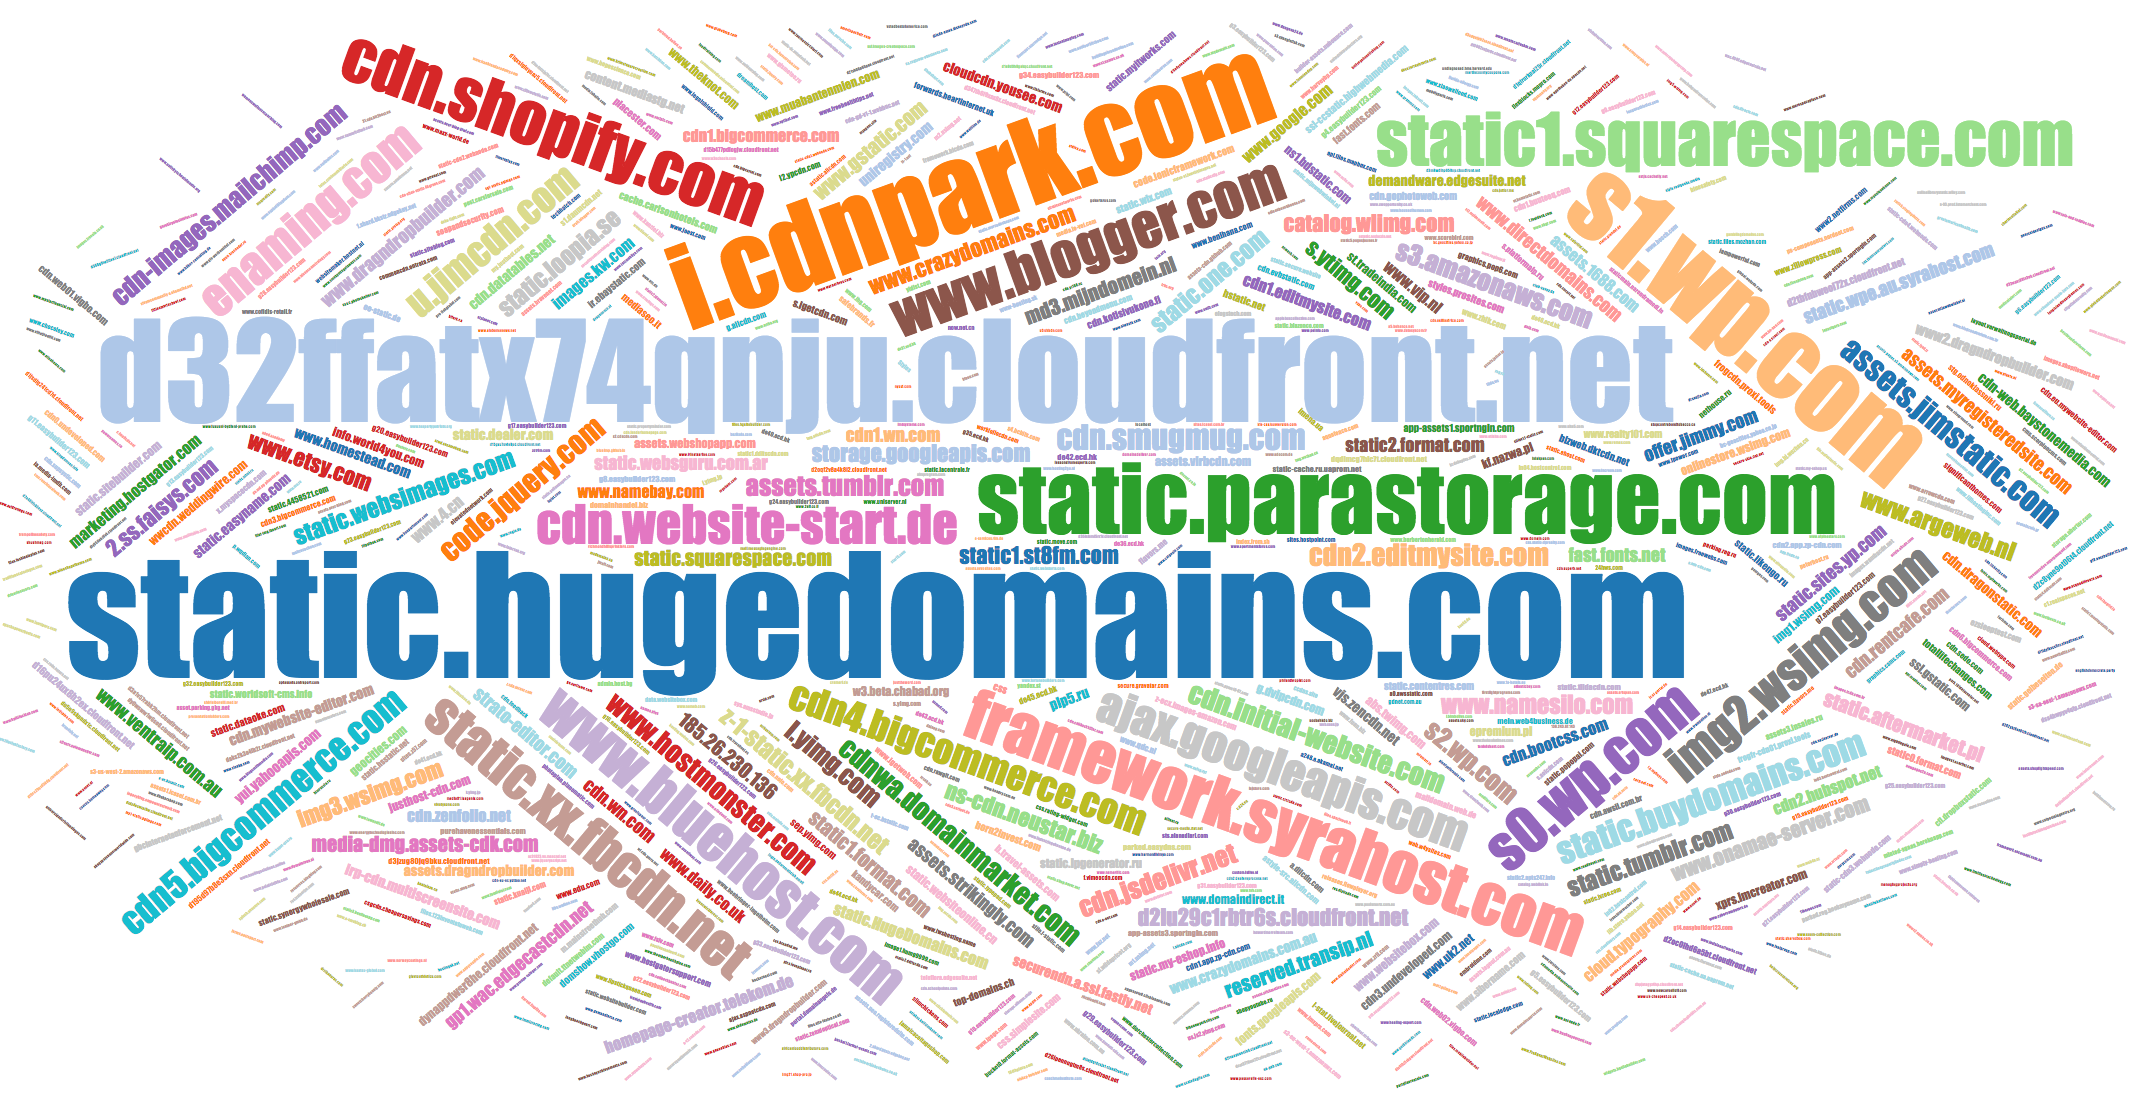 Popular names of CSS domains justhost-cdn.com, justtheword.com, etc.